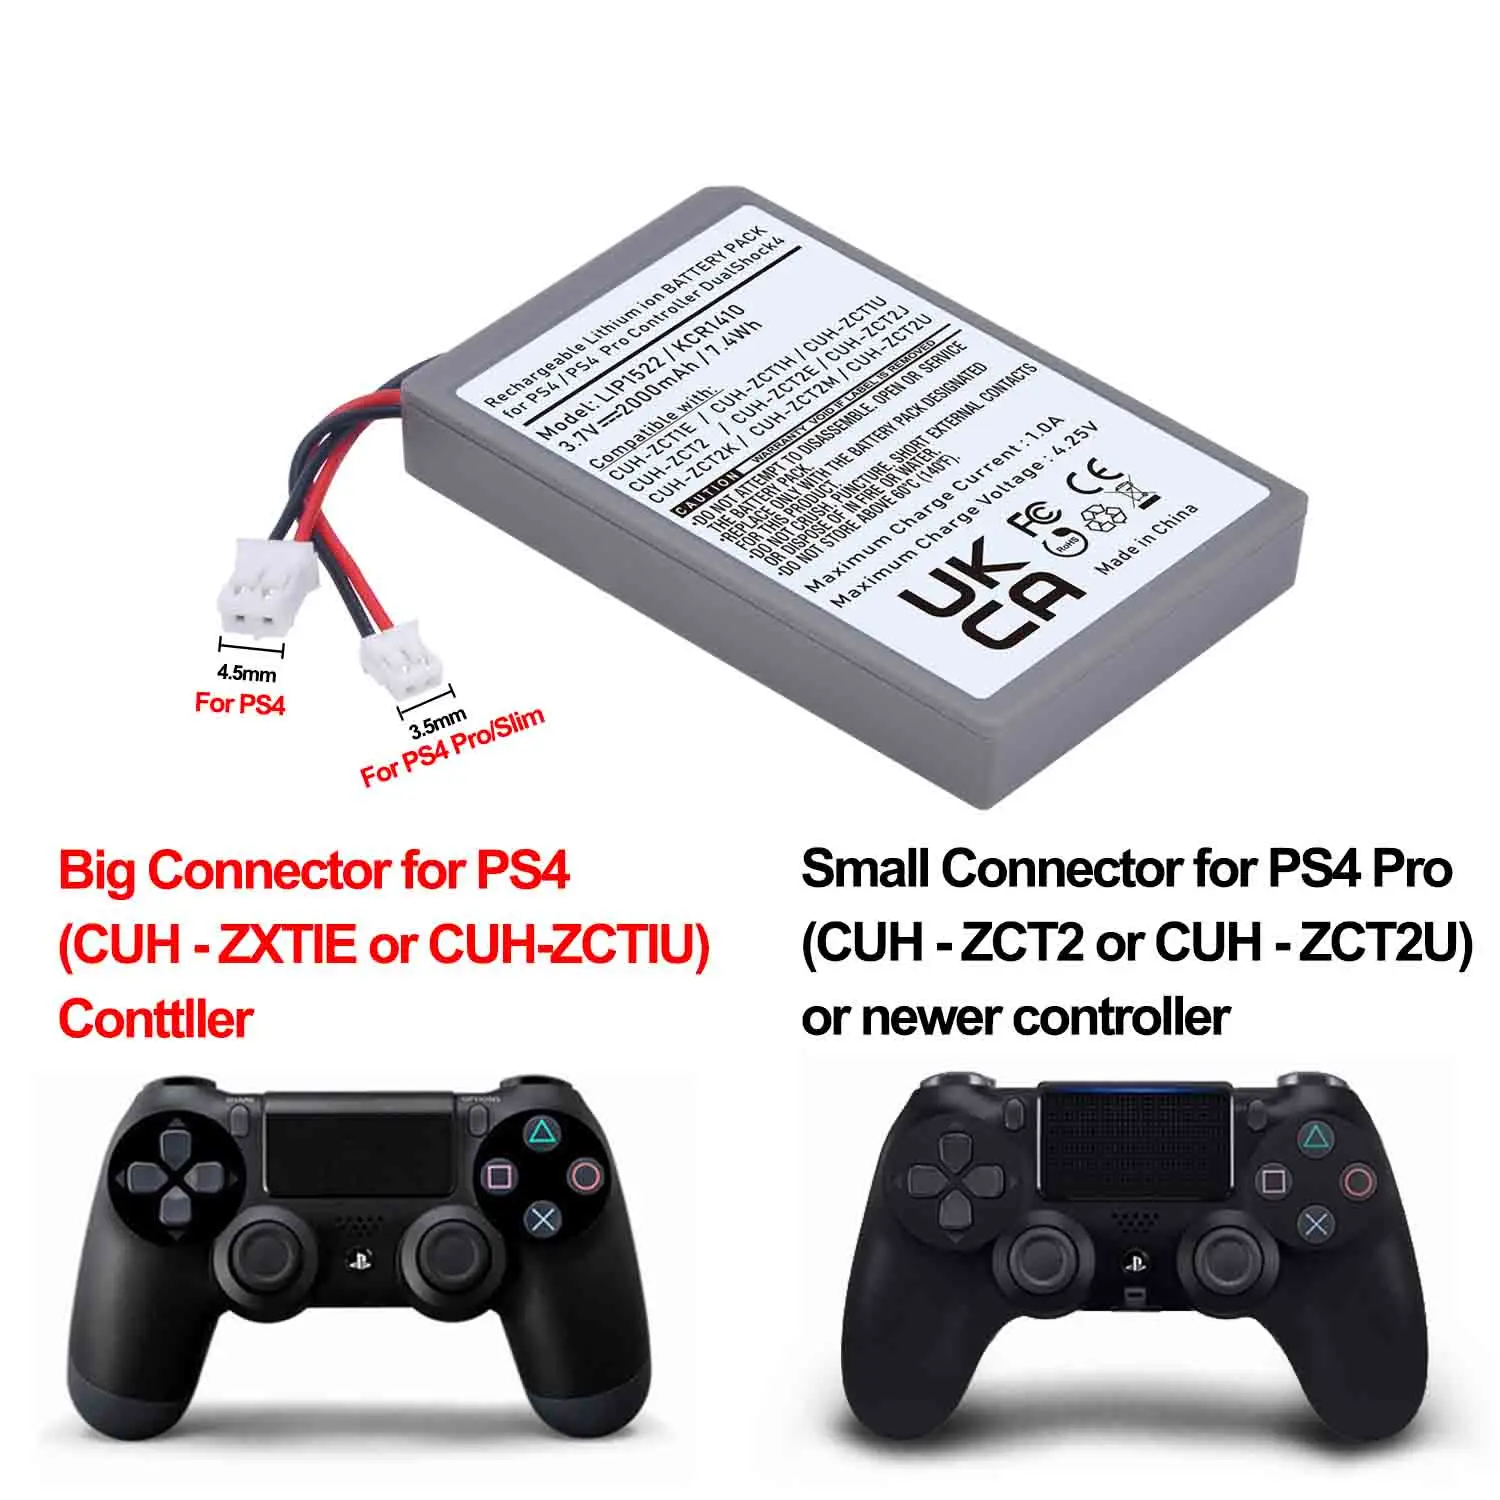 1x аккумулятор LIP1522/KCR1410 для контроллера Sony Playstation PS4/PS4 Pro